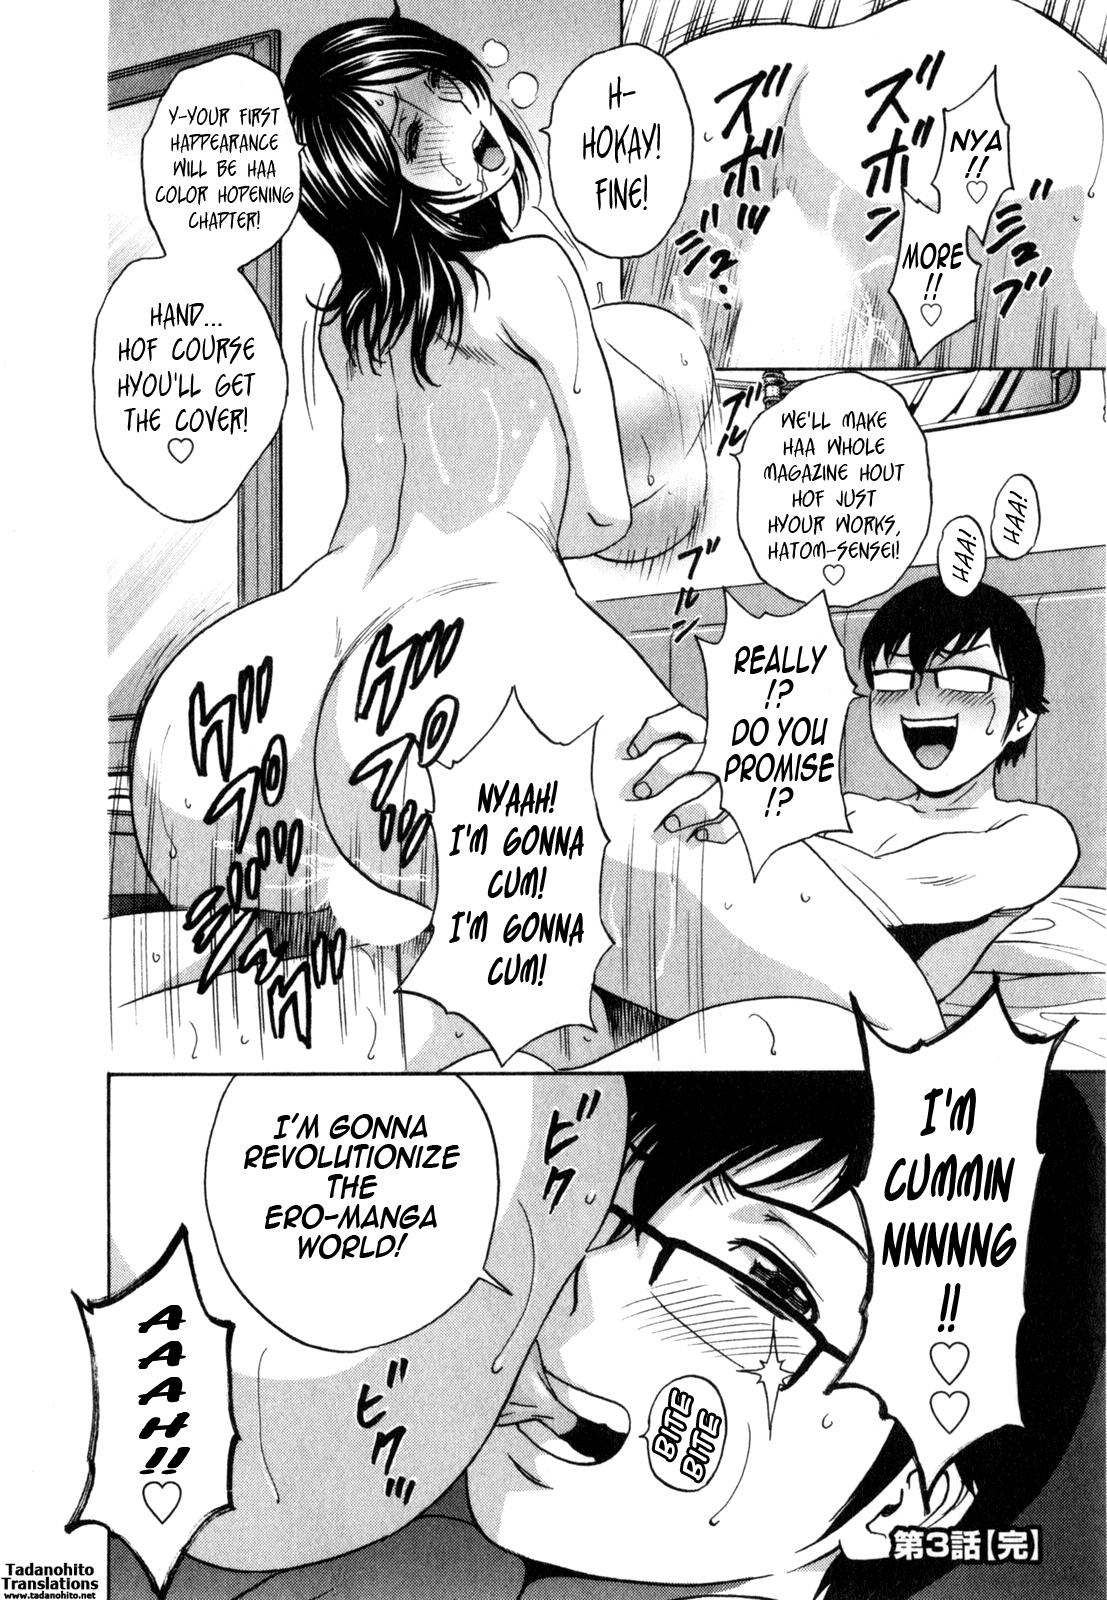 [Hidemaru] Life with Married Women Just Like a Manga 3 - Ch. 1-7 [English] {Tadanohito} 63